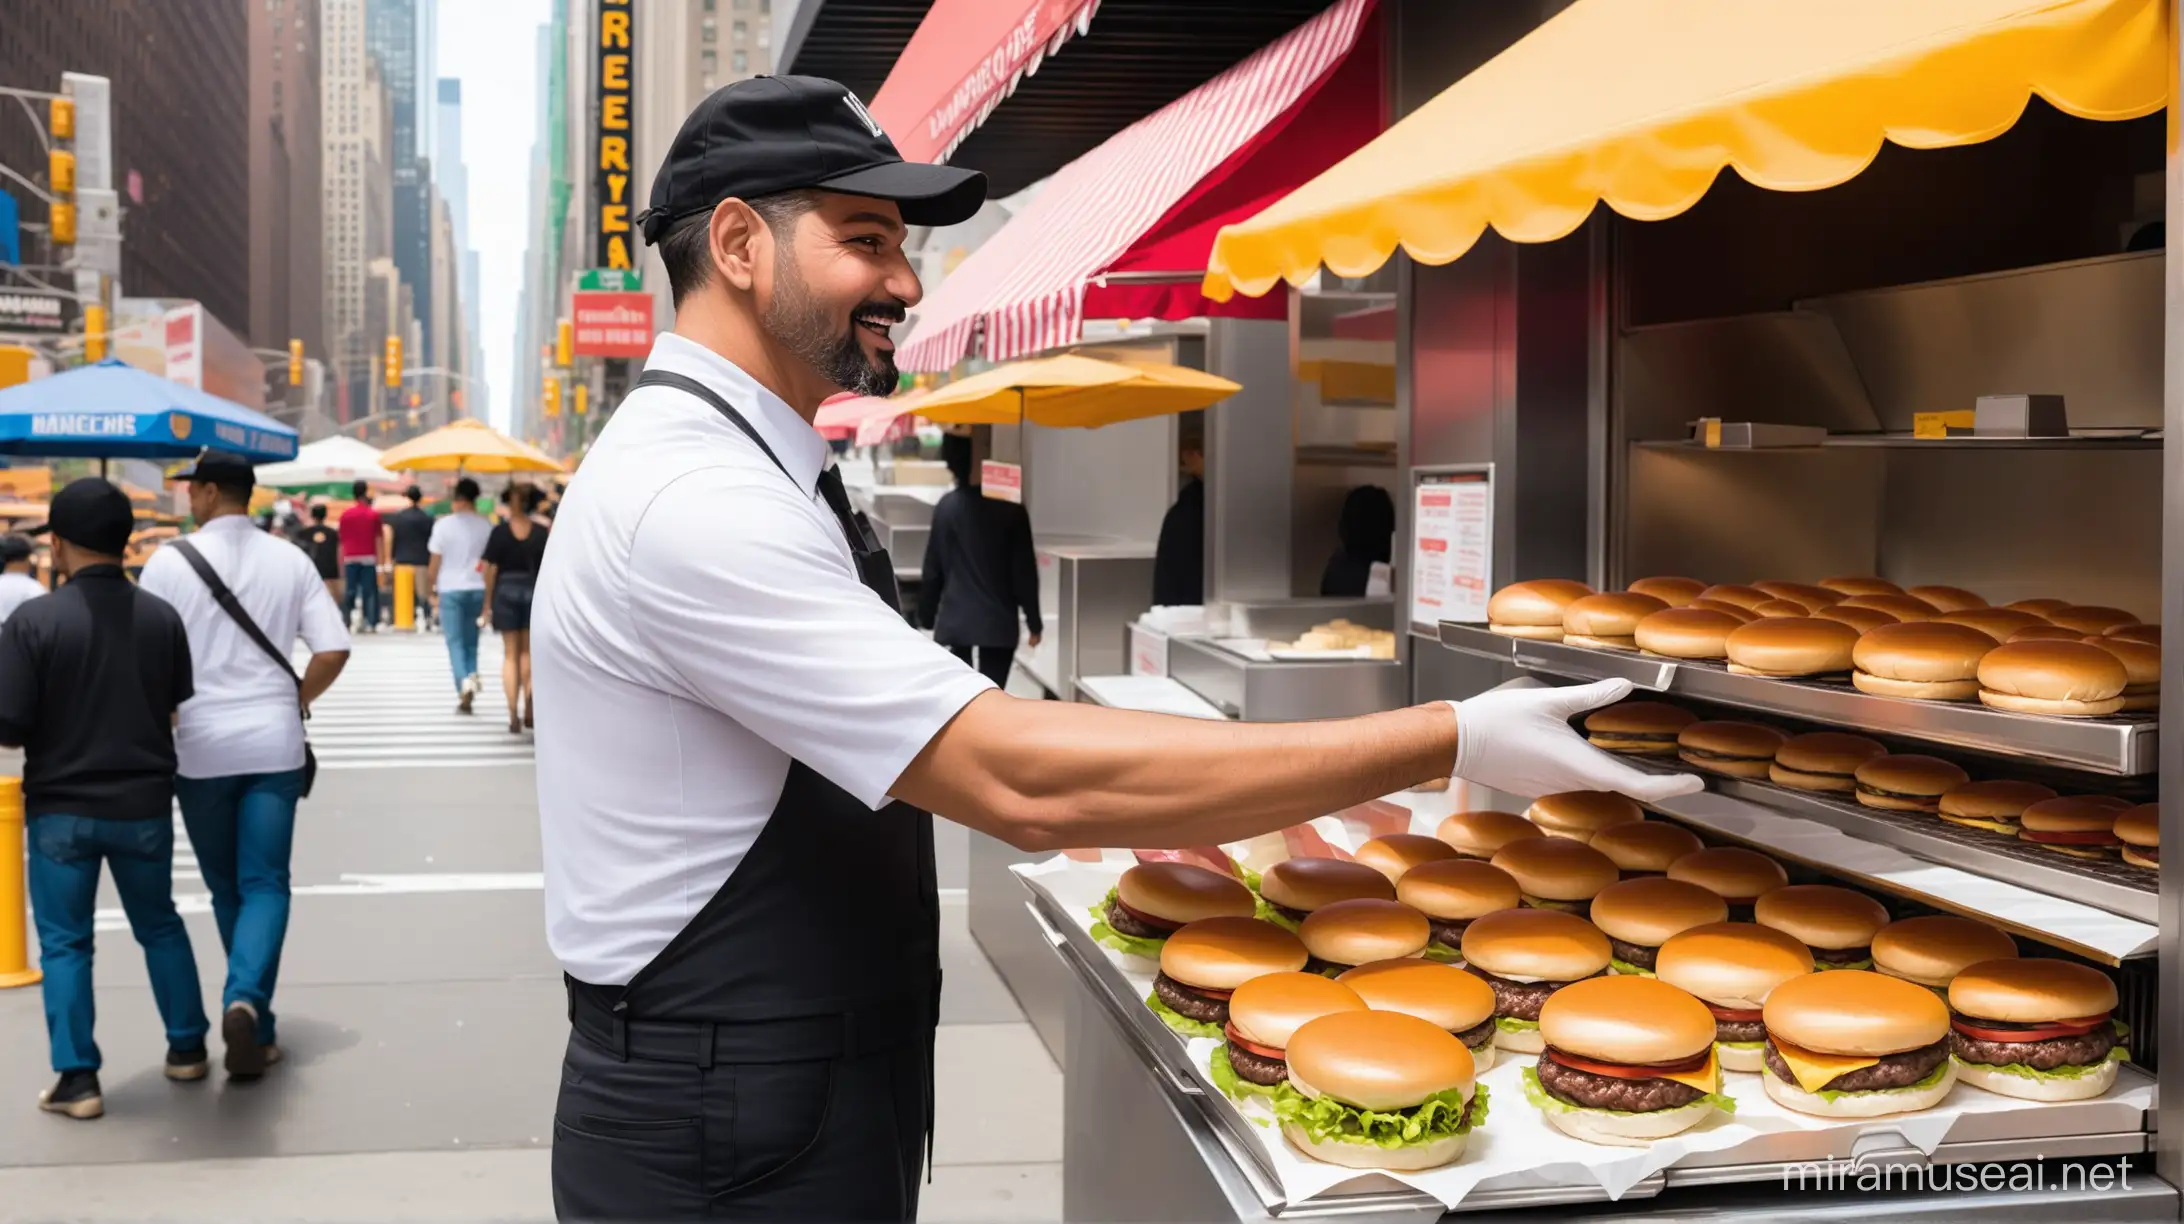 Urban Hamburger Vendor in New York City